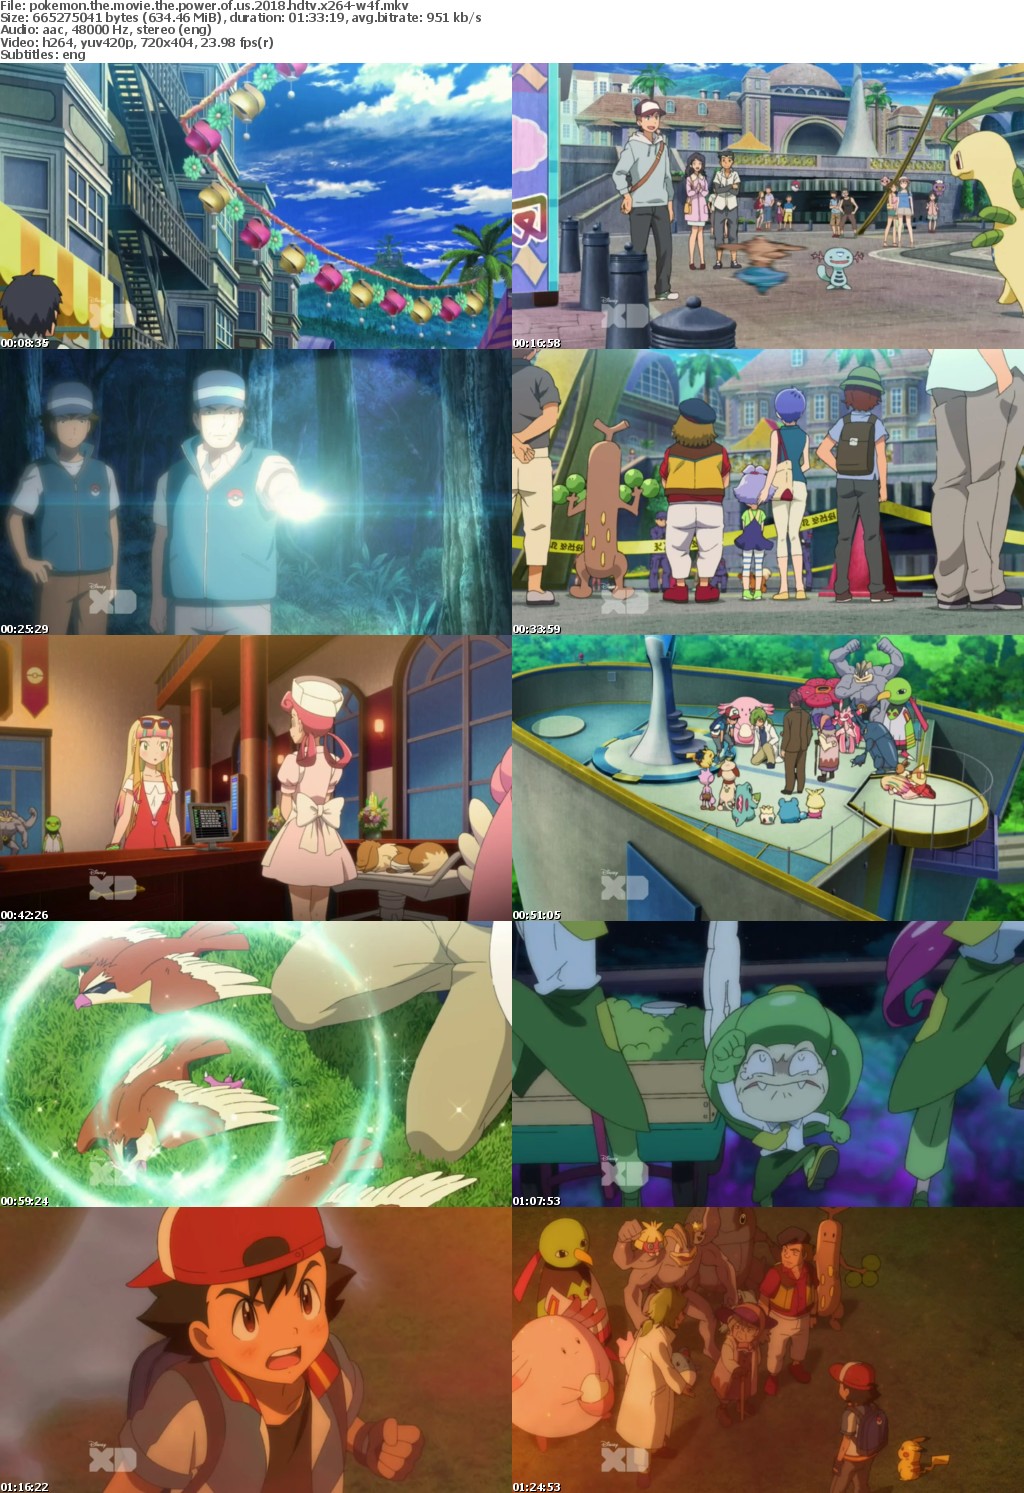 Pokemon The Movie The Power of Us (2018) HDTV x264-W4Frarbg